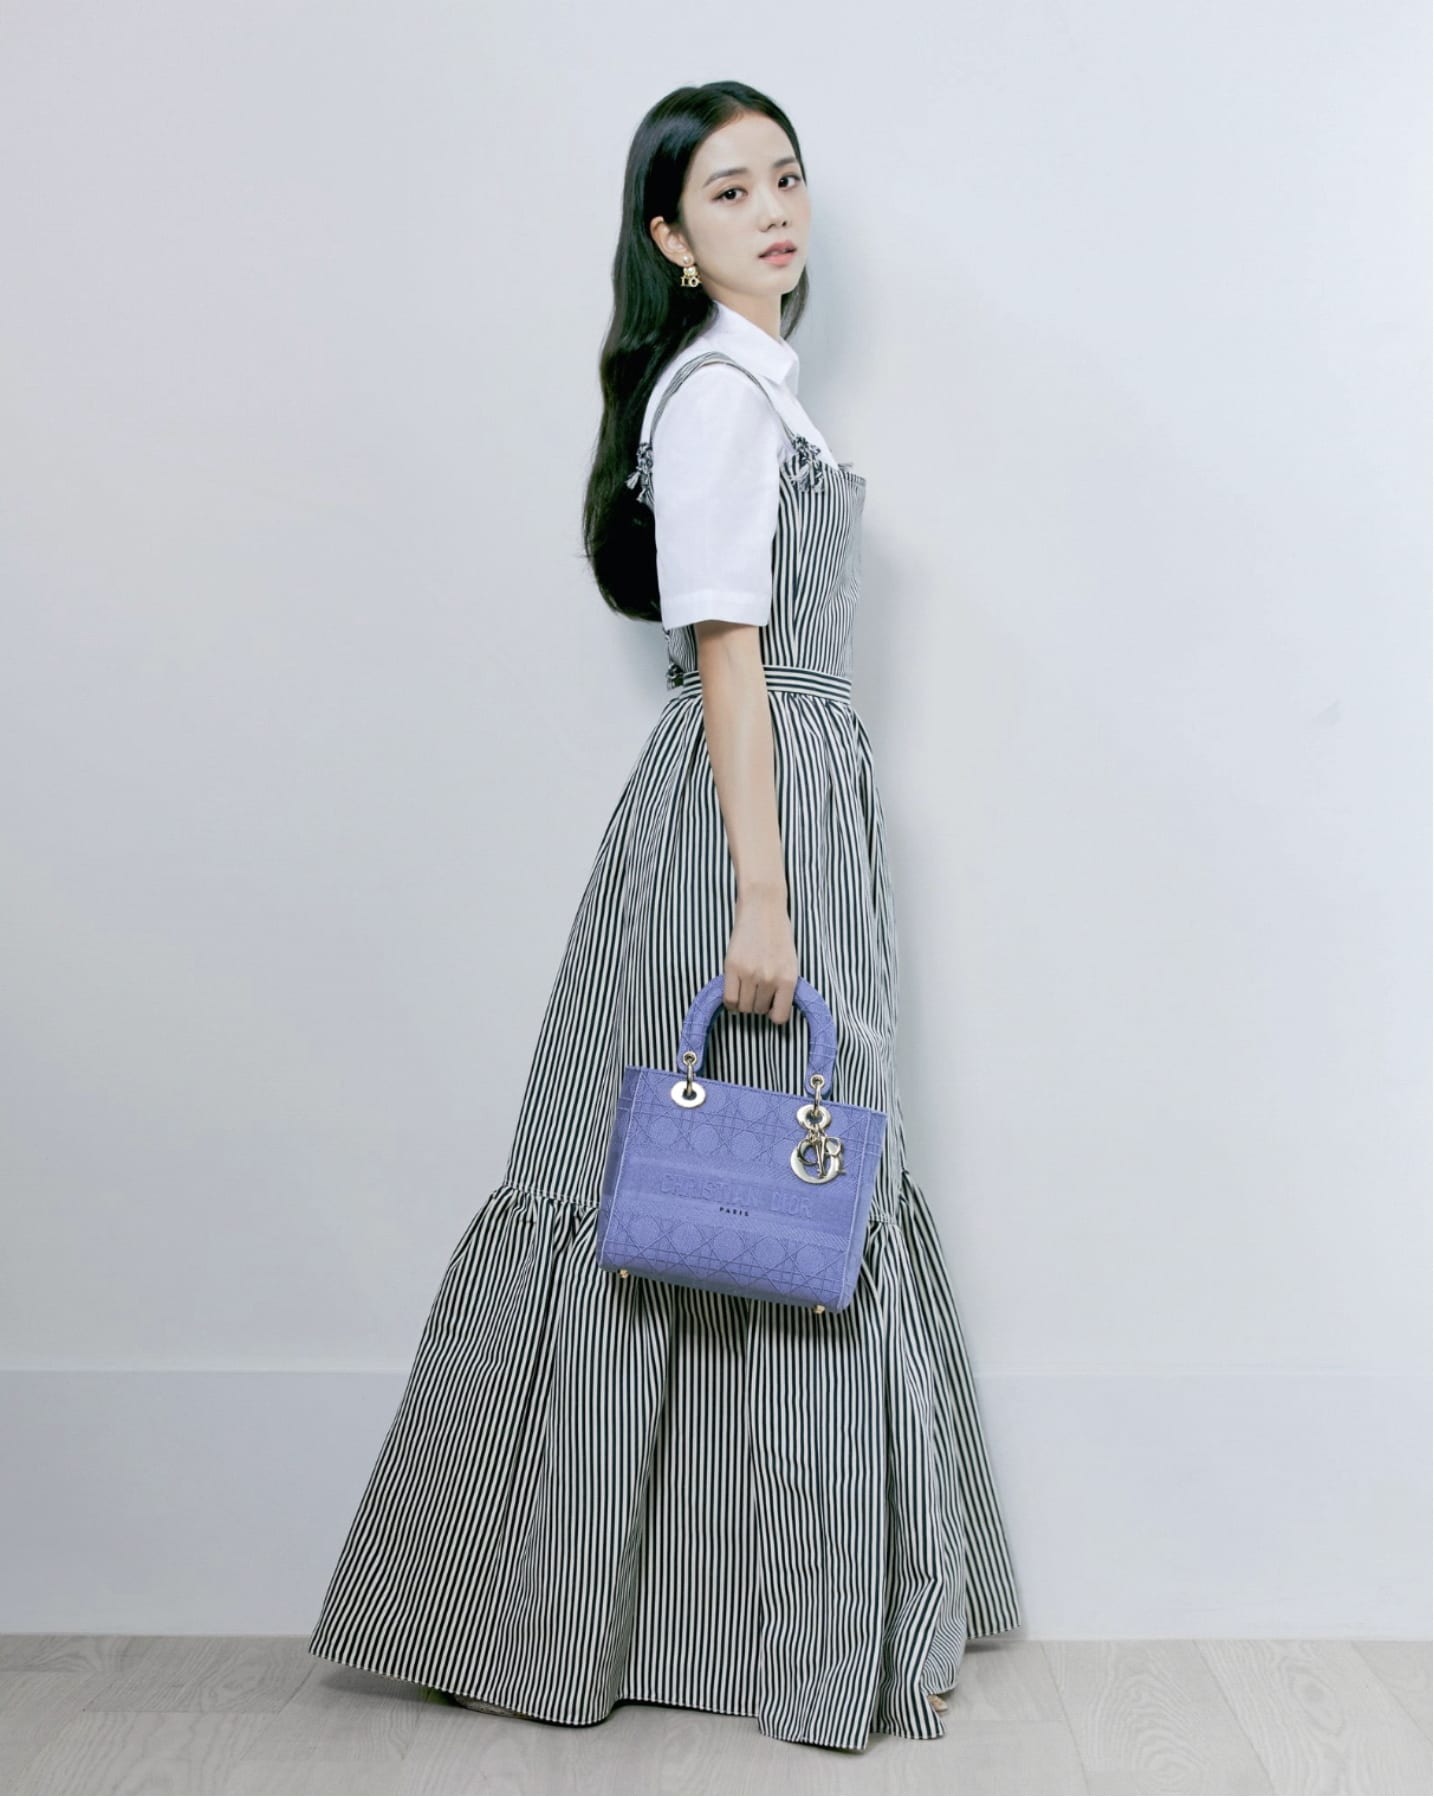 Blackpink Jisoo Dior Elbisesi Ve Kupeleriyle Cok Sik Korebu Com